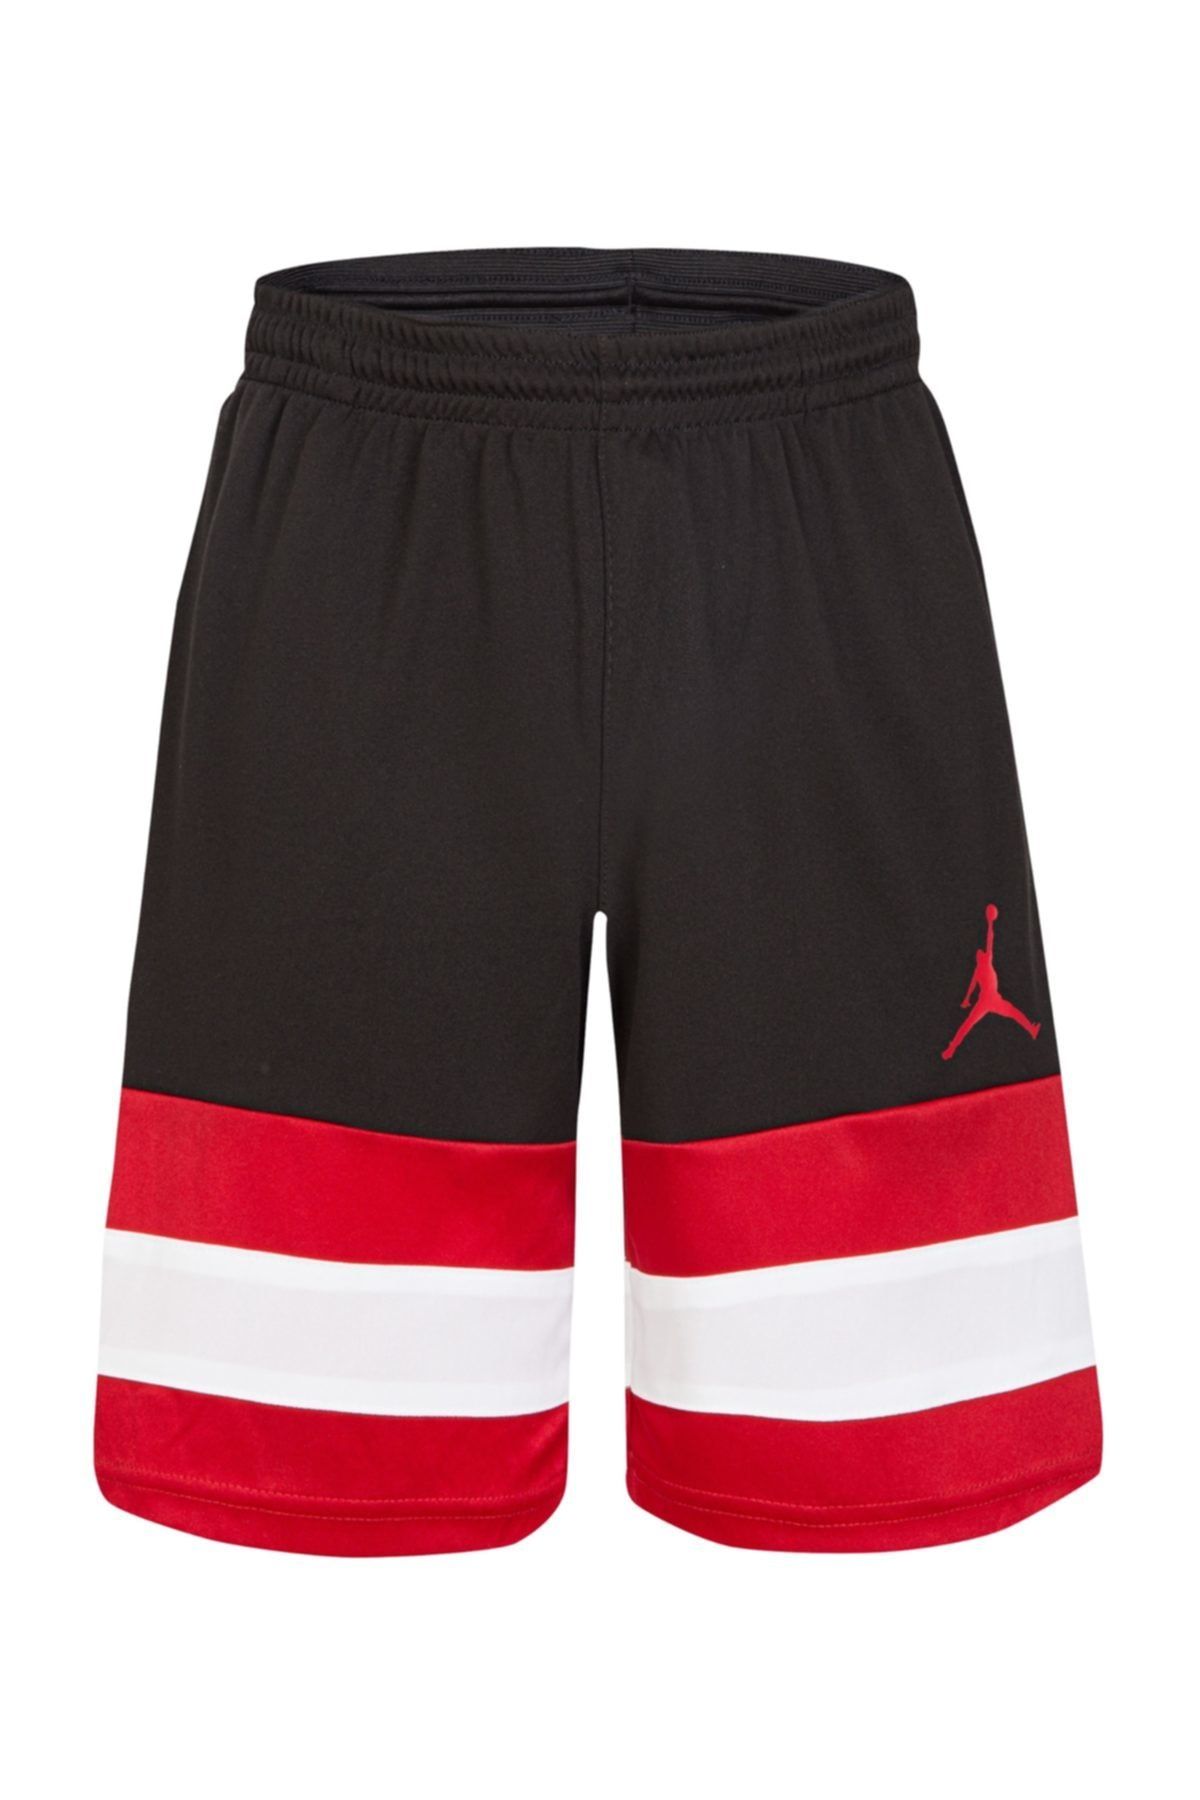 Nike Jordan Jumpman Genç Basketbol Şortu